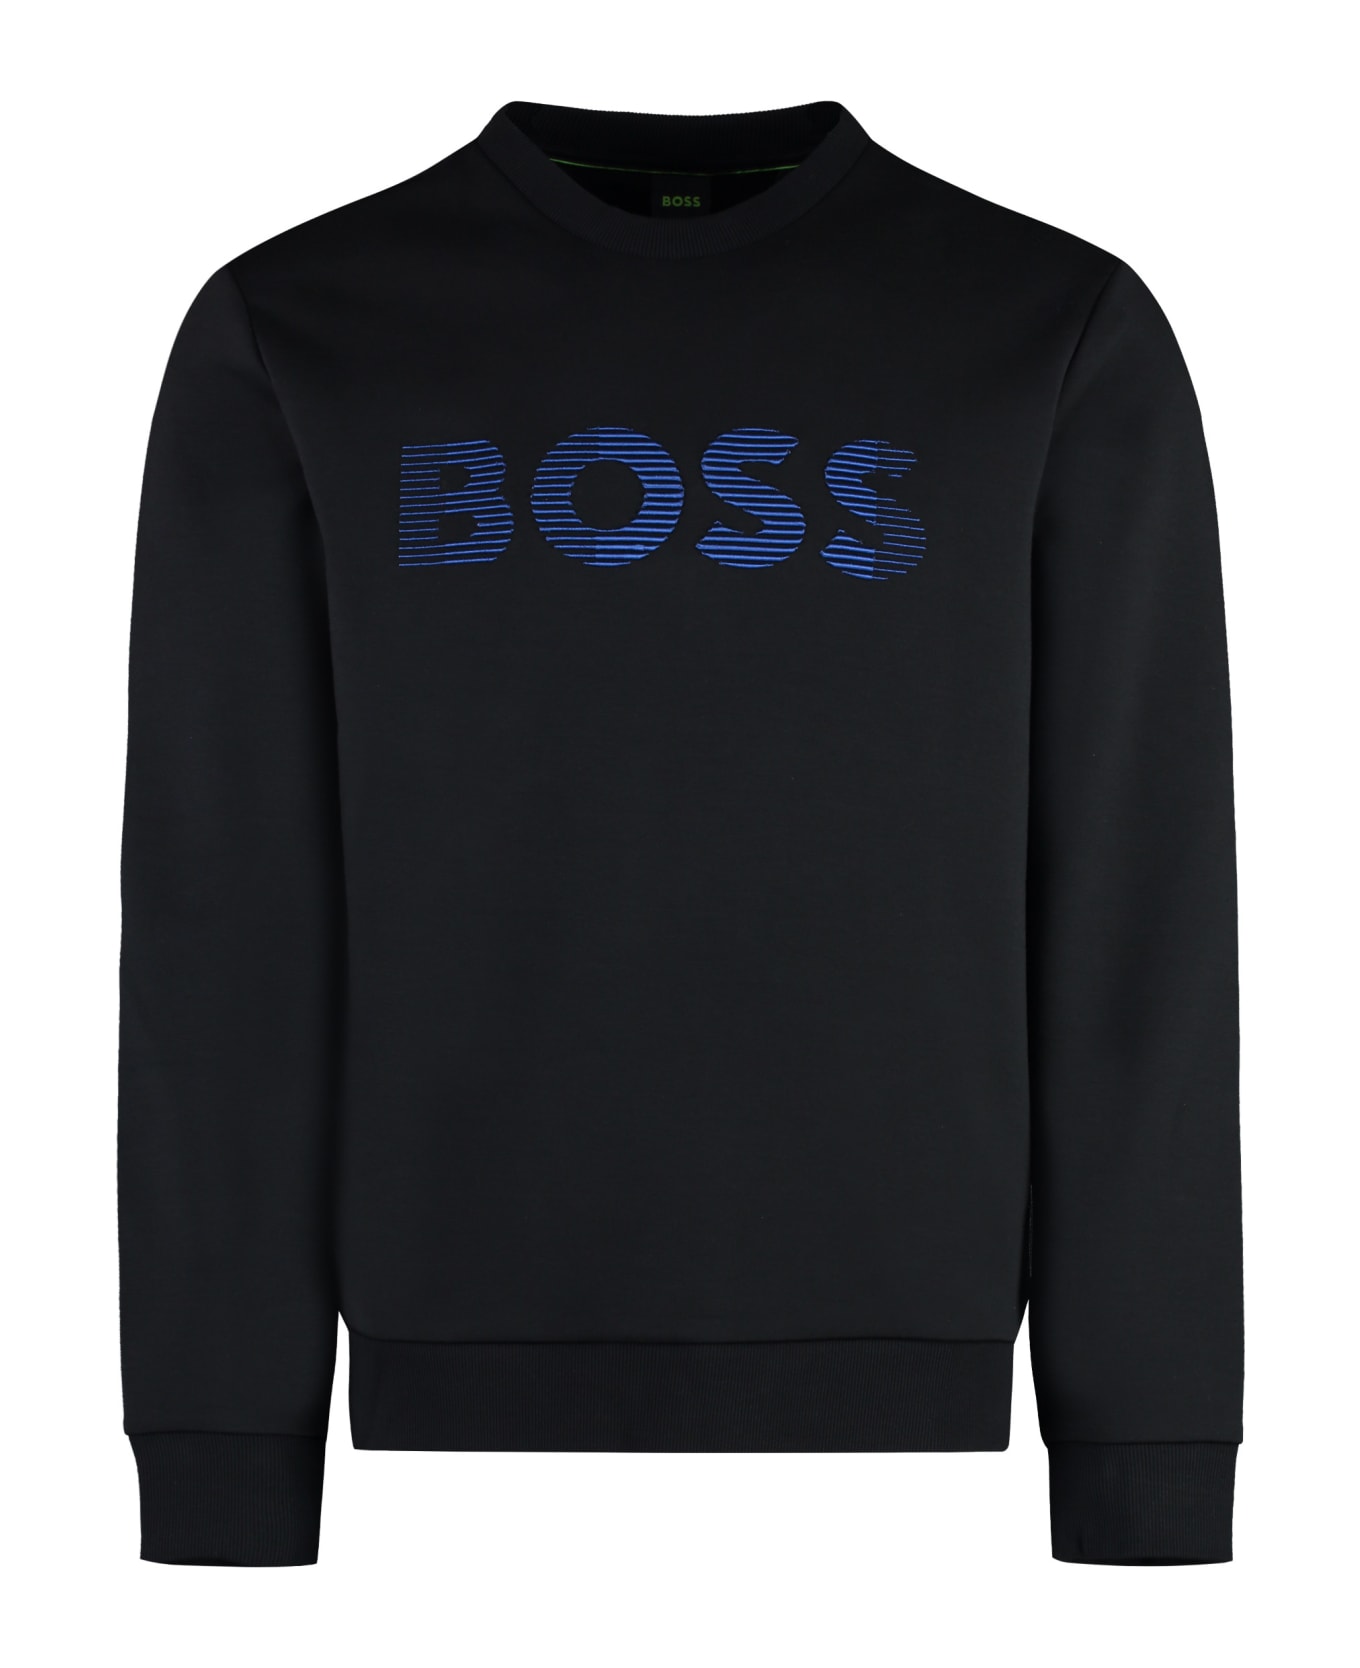 Hugo Boss Cotton Crew-neck Sweatshirt - black